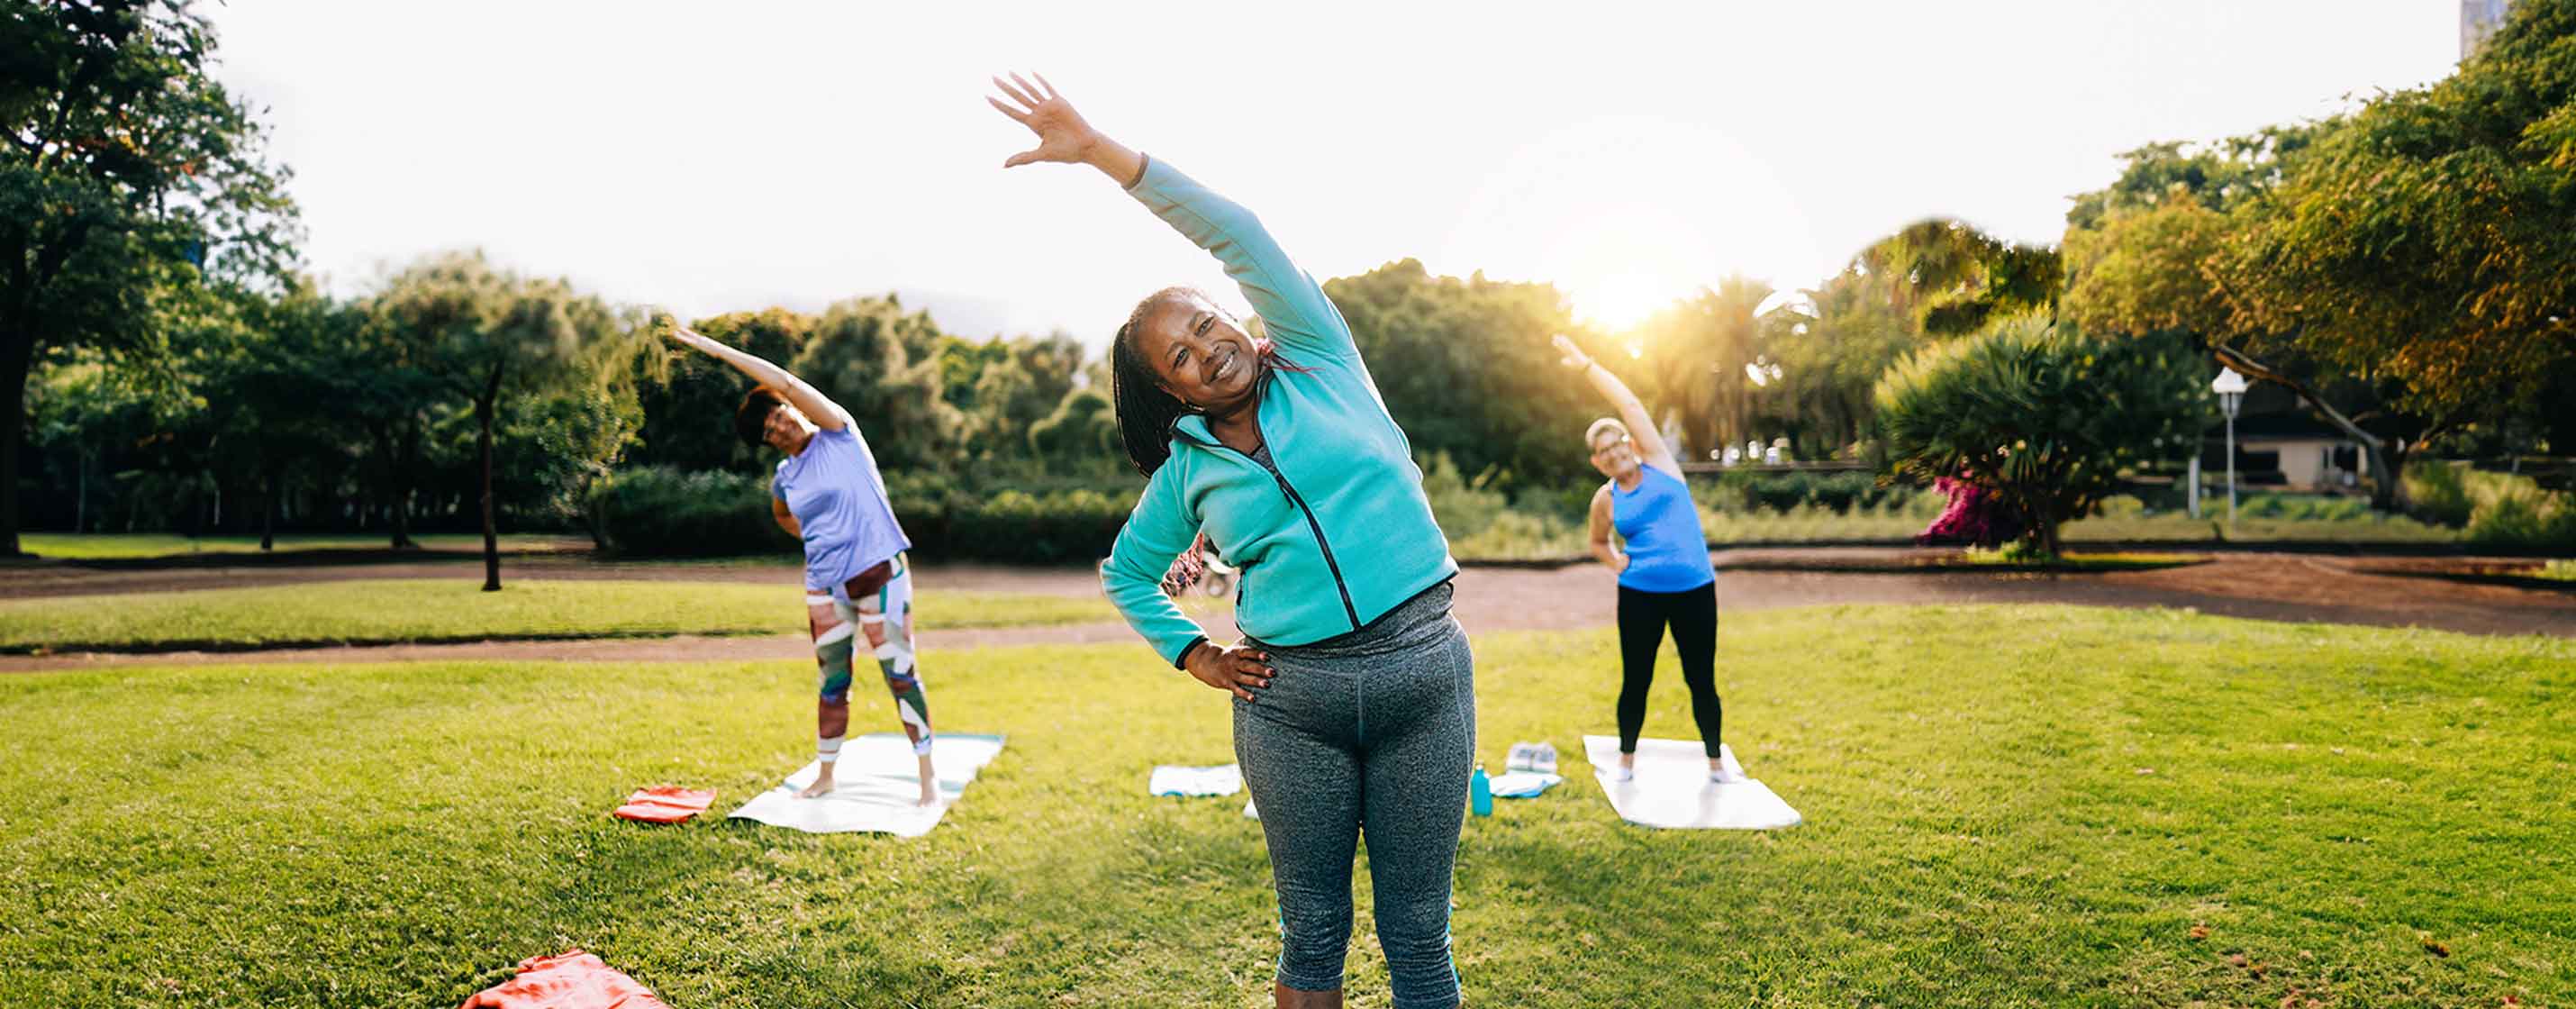 Senior women exercising during yoga workout at outdoors city park.